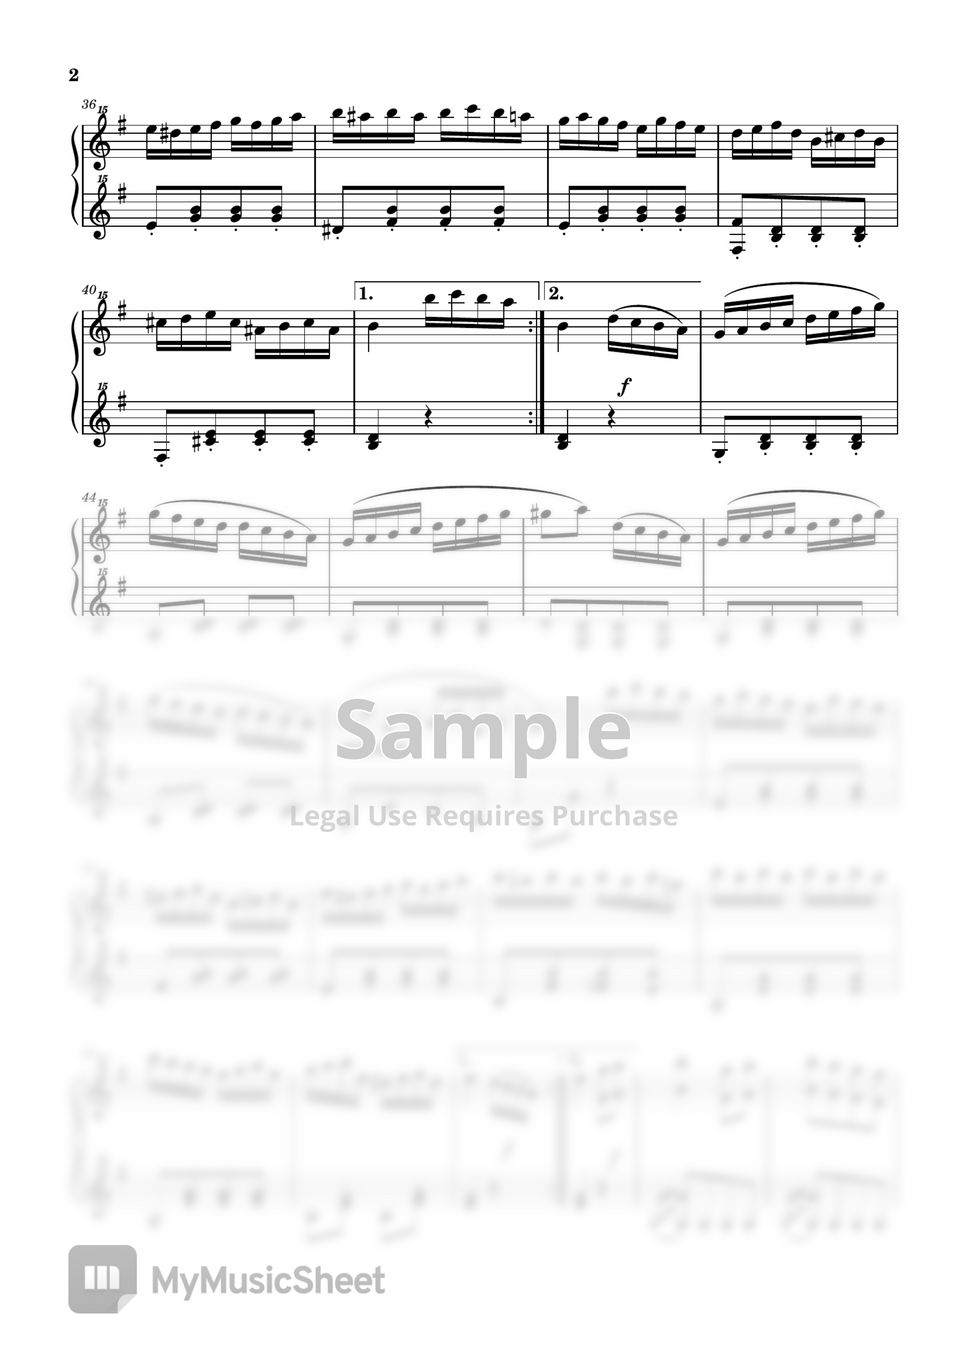 Mozart - Turkish March (toy piano / 32 keys / classical) by Miyuh Kawanishi